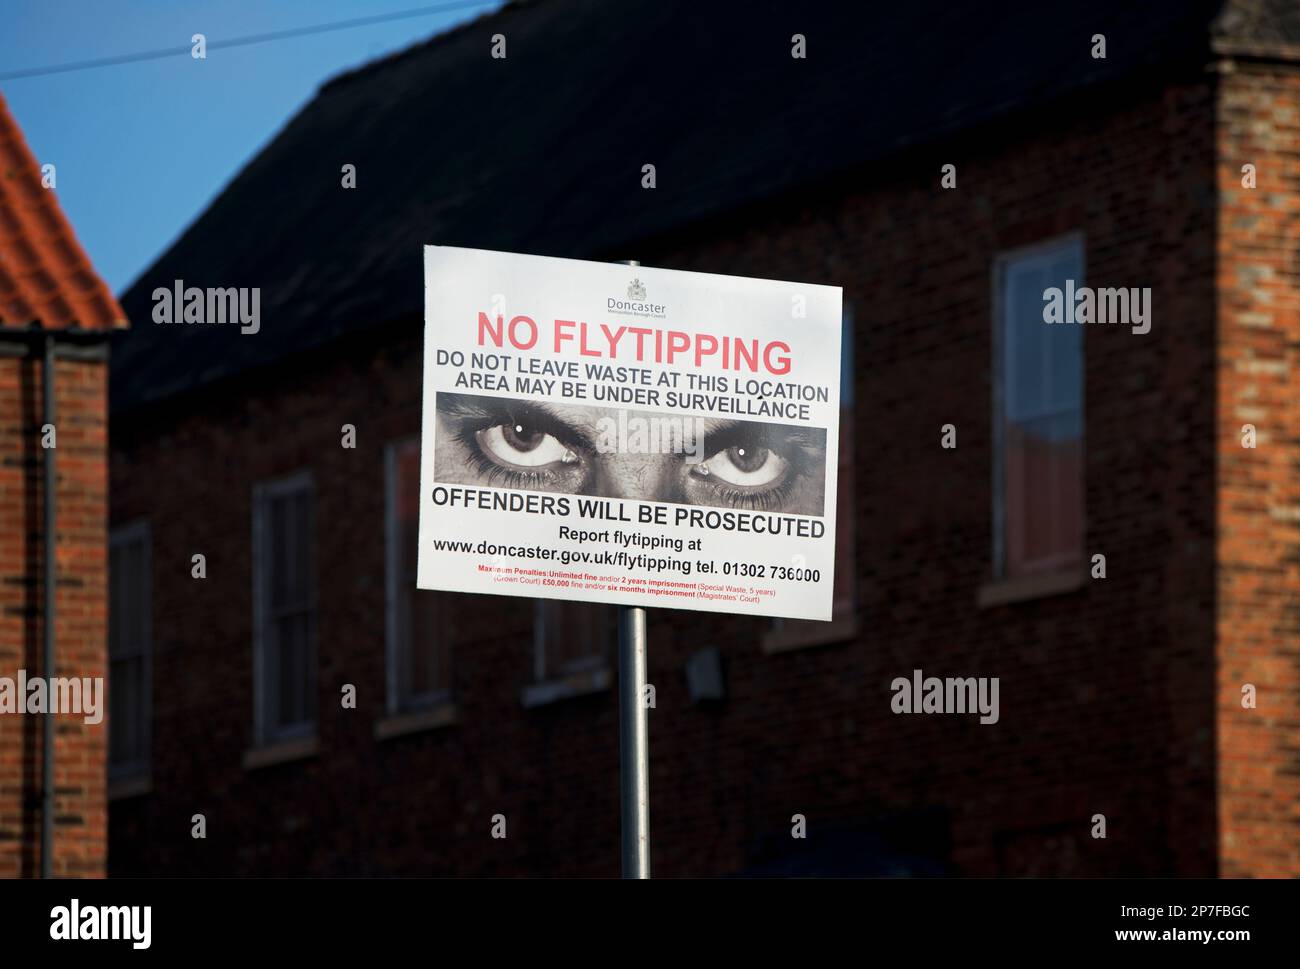 Warning sign – NO FLYTIPPING - in rural setting, England, UK Stock Photo